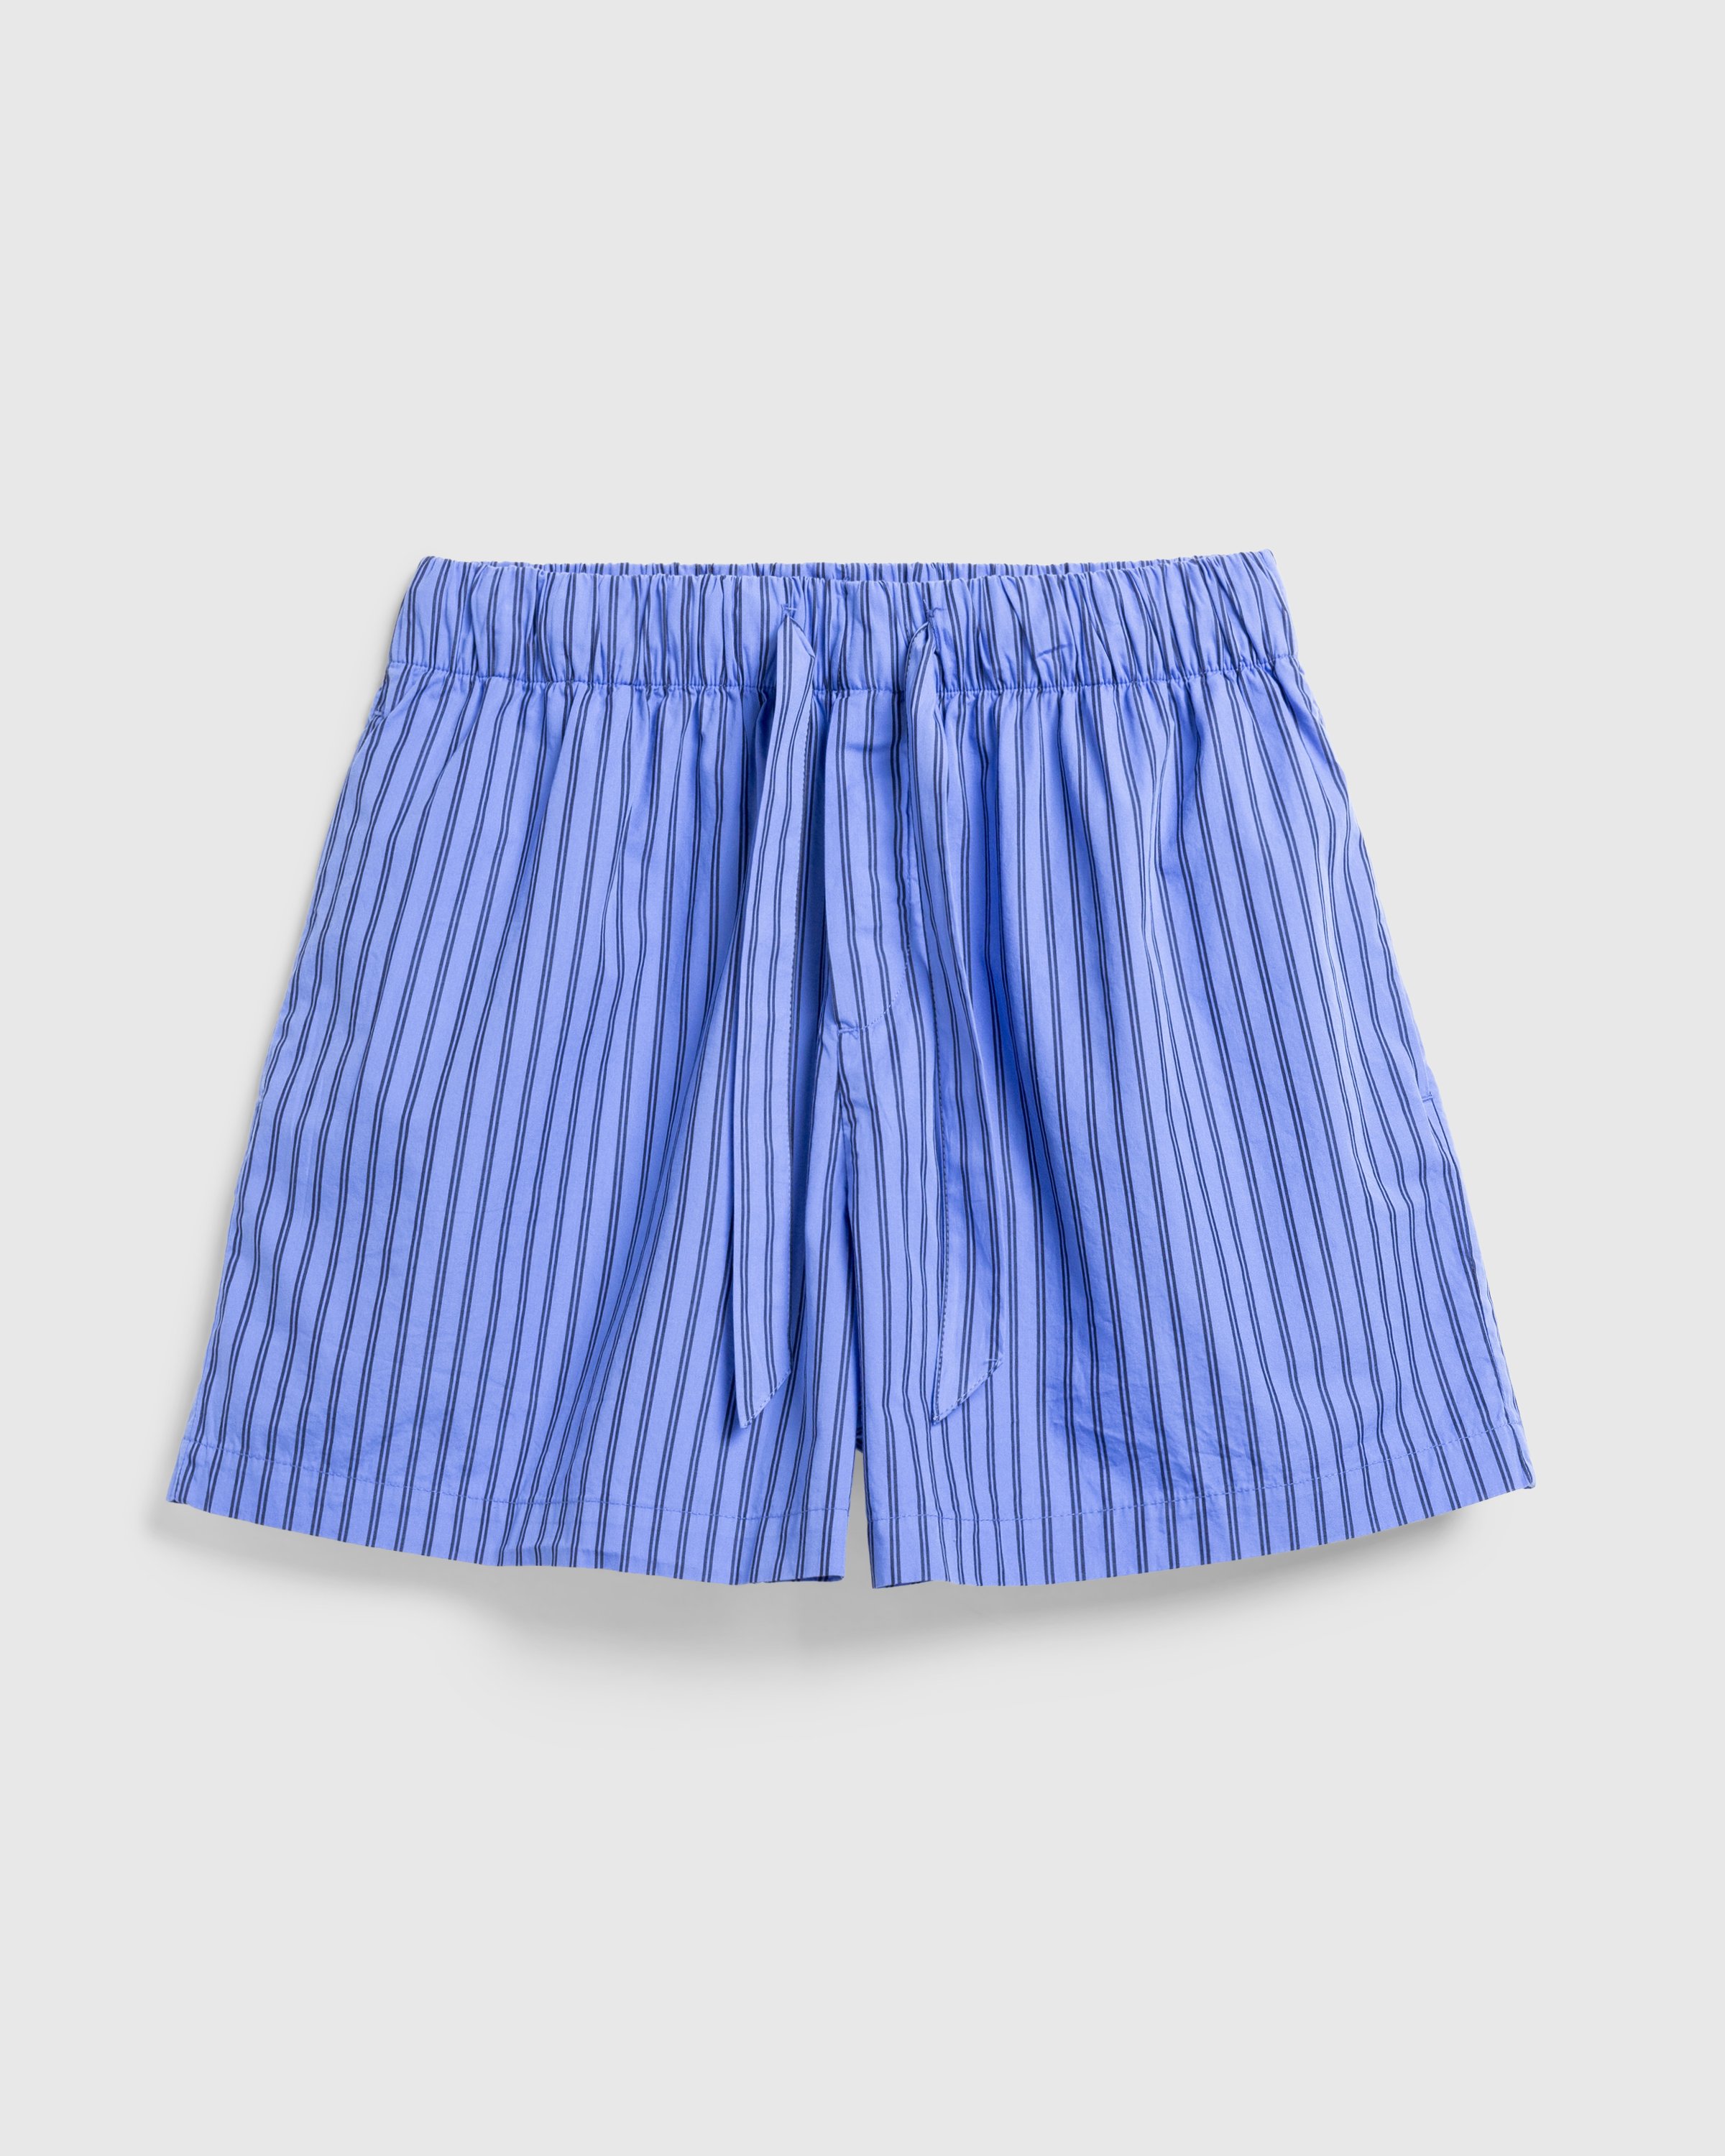 Tekla - Cotton Poplin - Pyjamas Shorts Boro Stripes - Clothing - Blue - Image 1